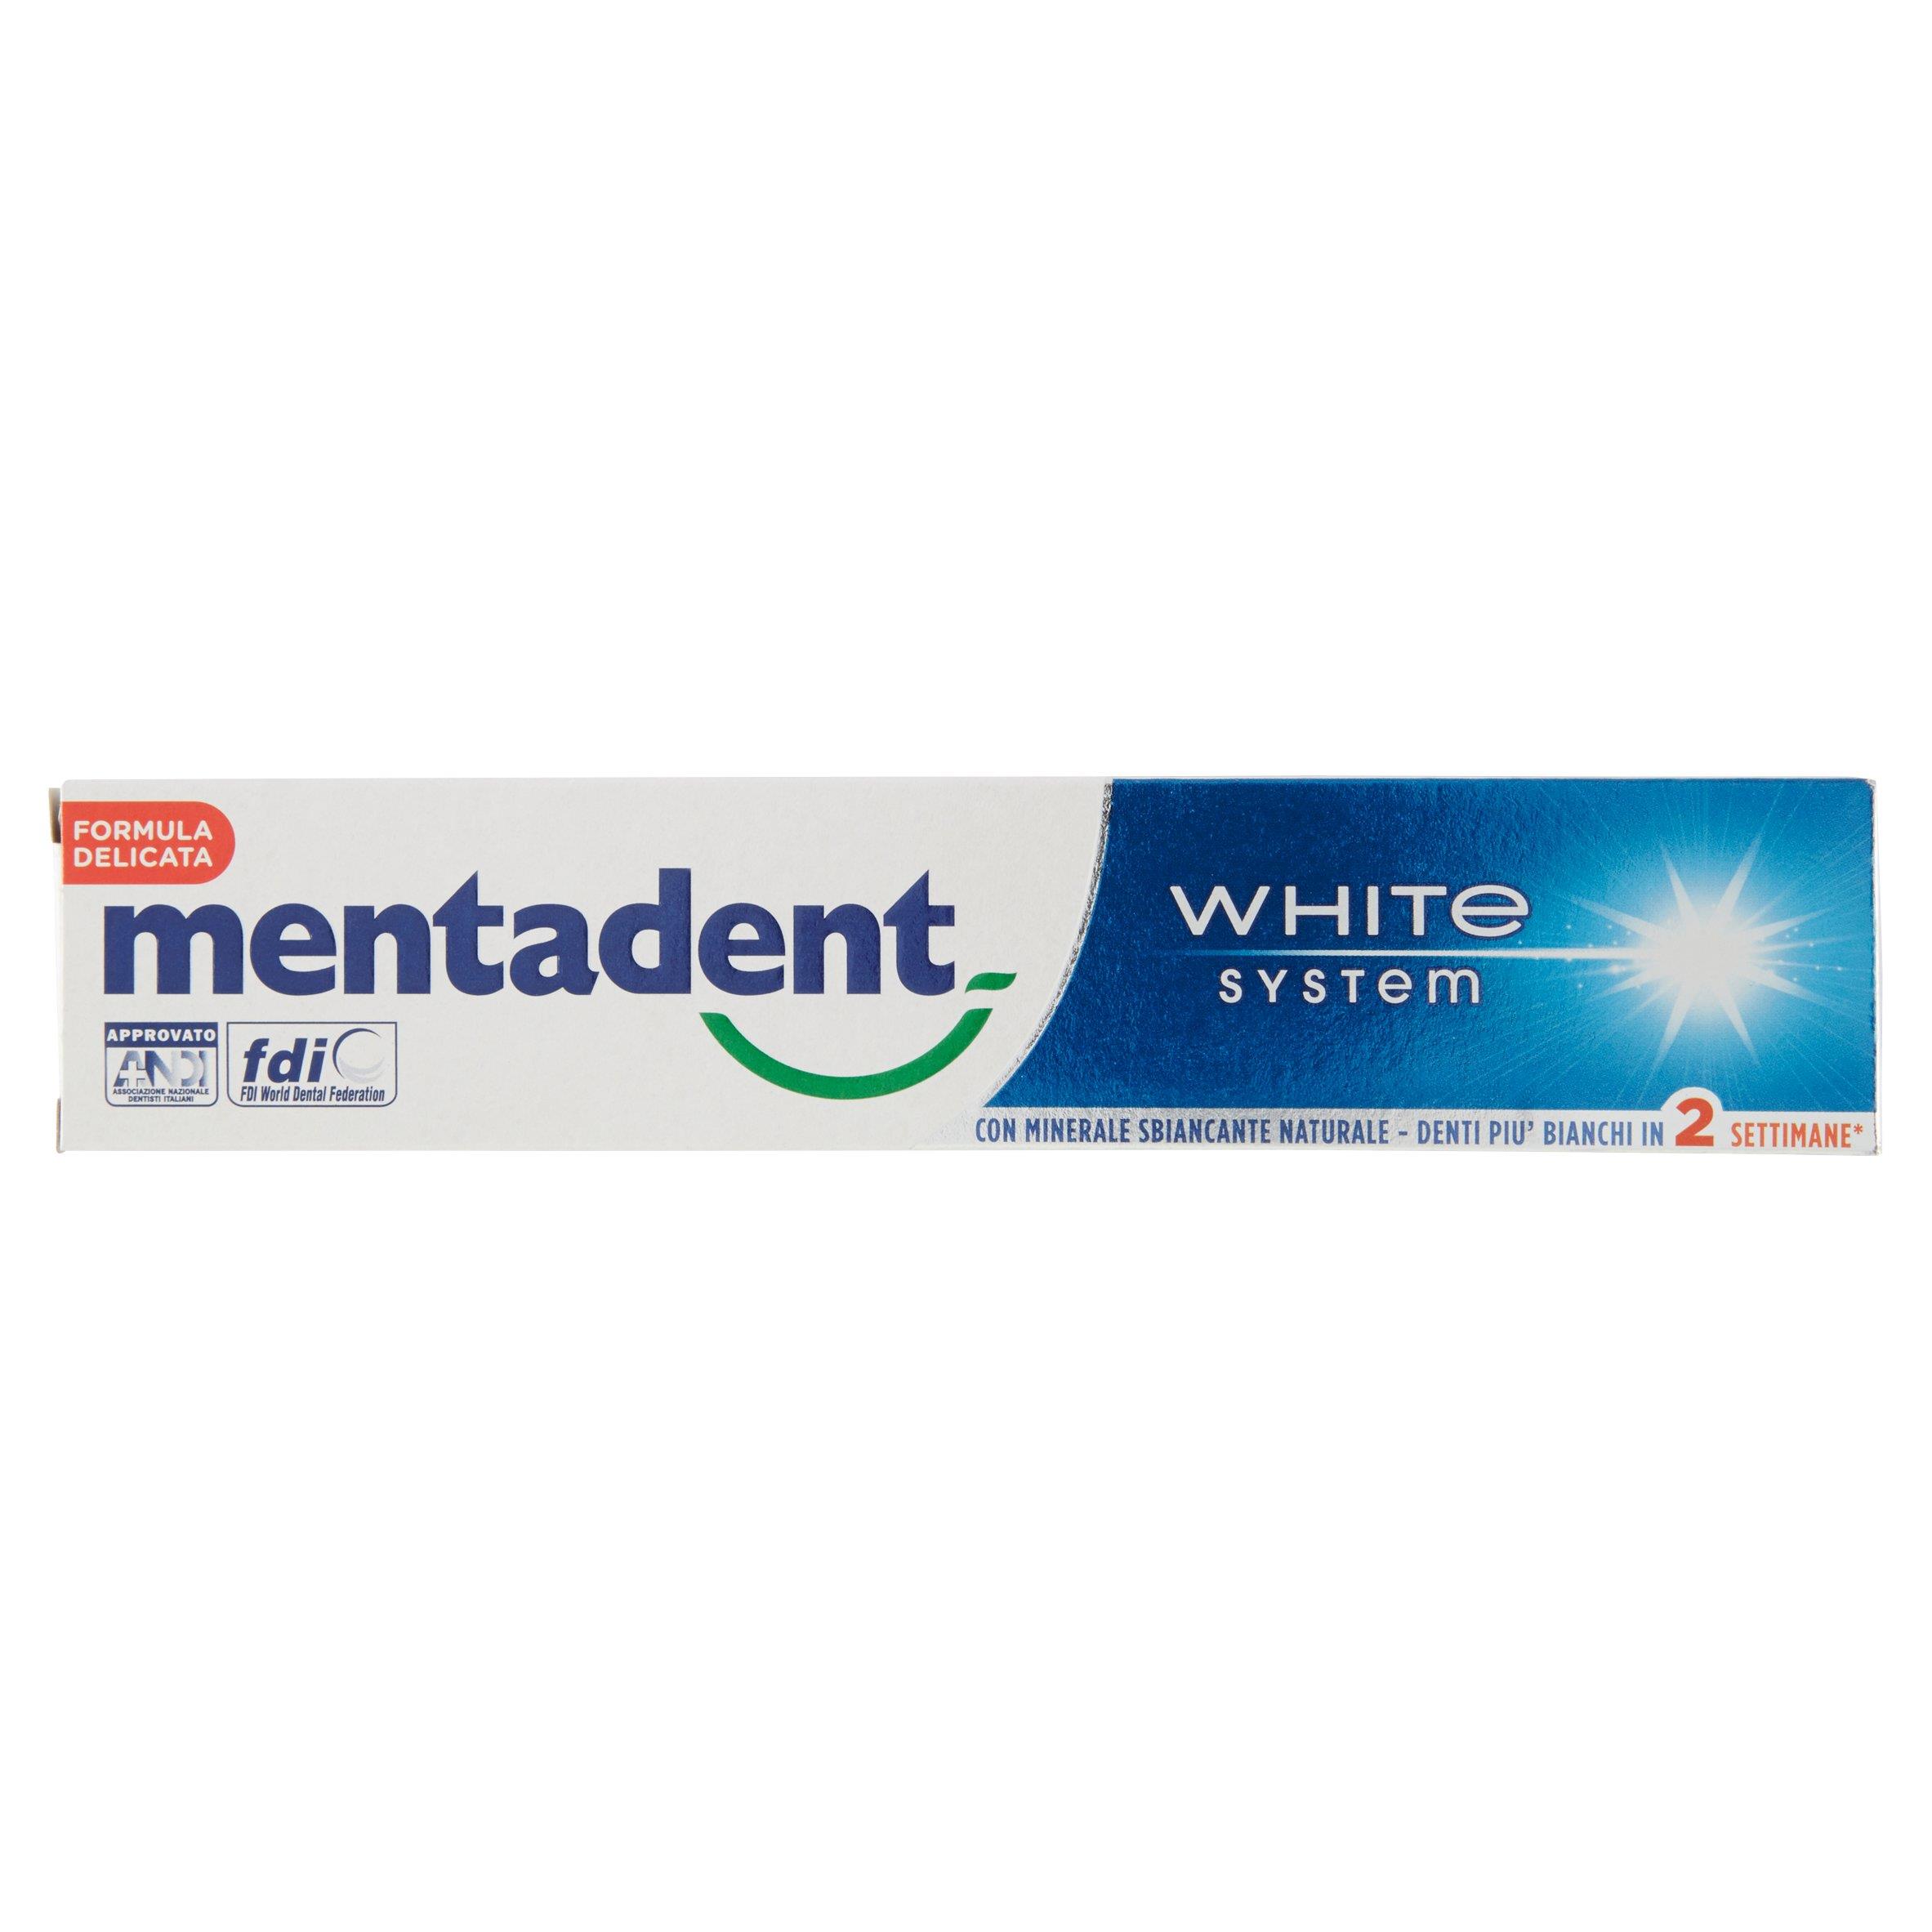 MENTADENT DENTIF WHITE SYSTEM NEW 75 ML   M